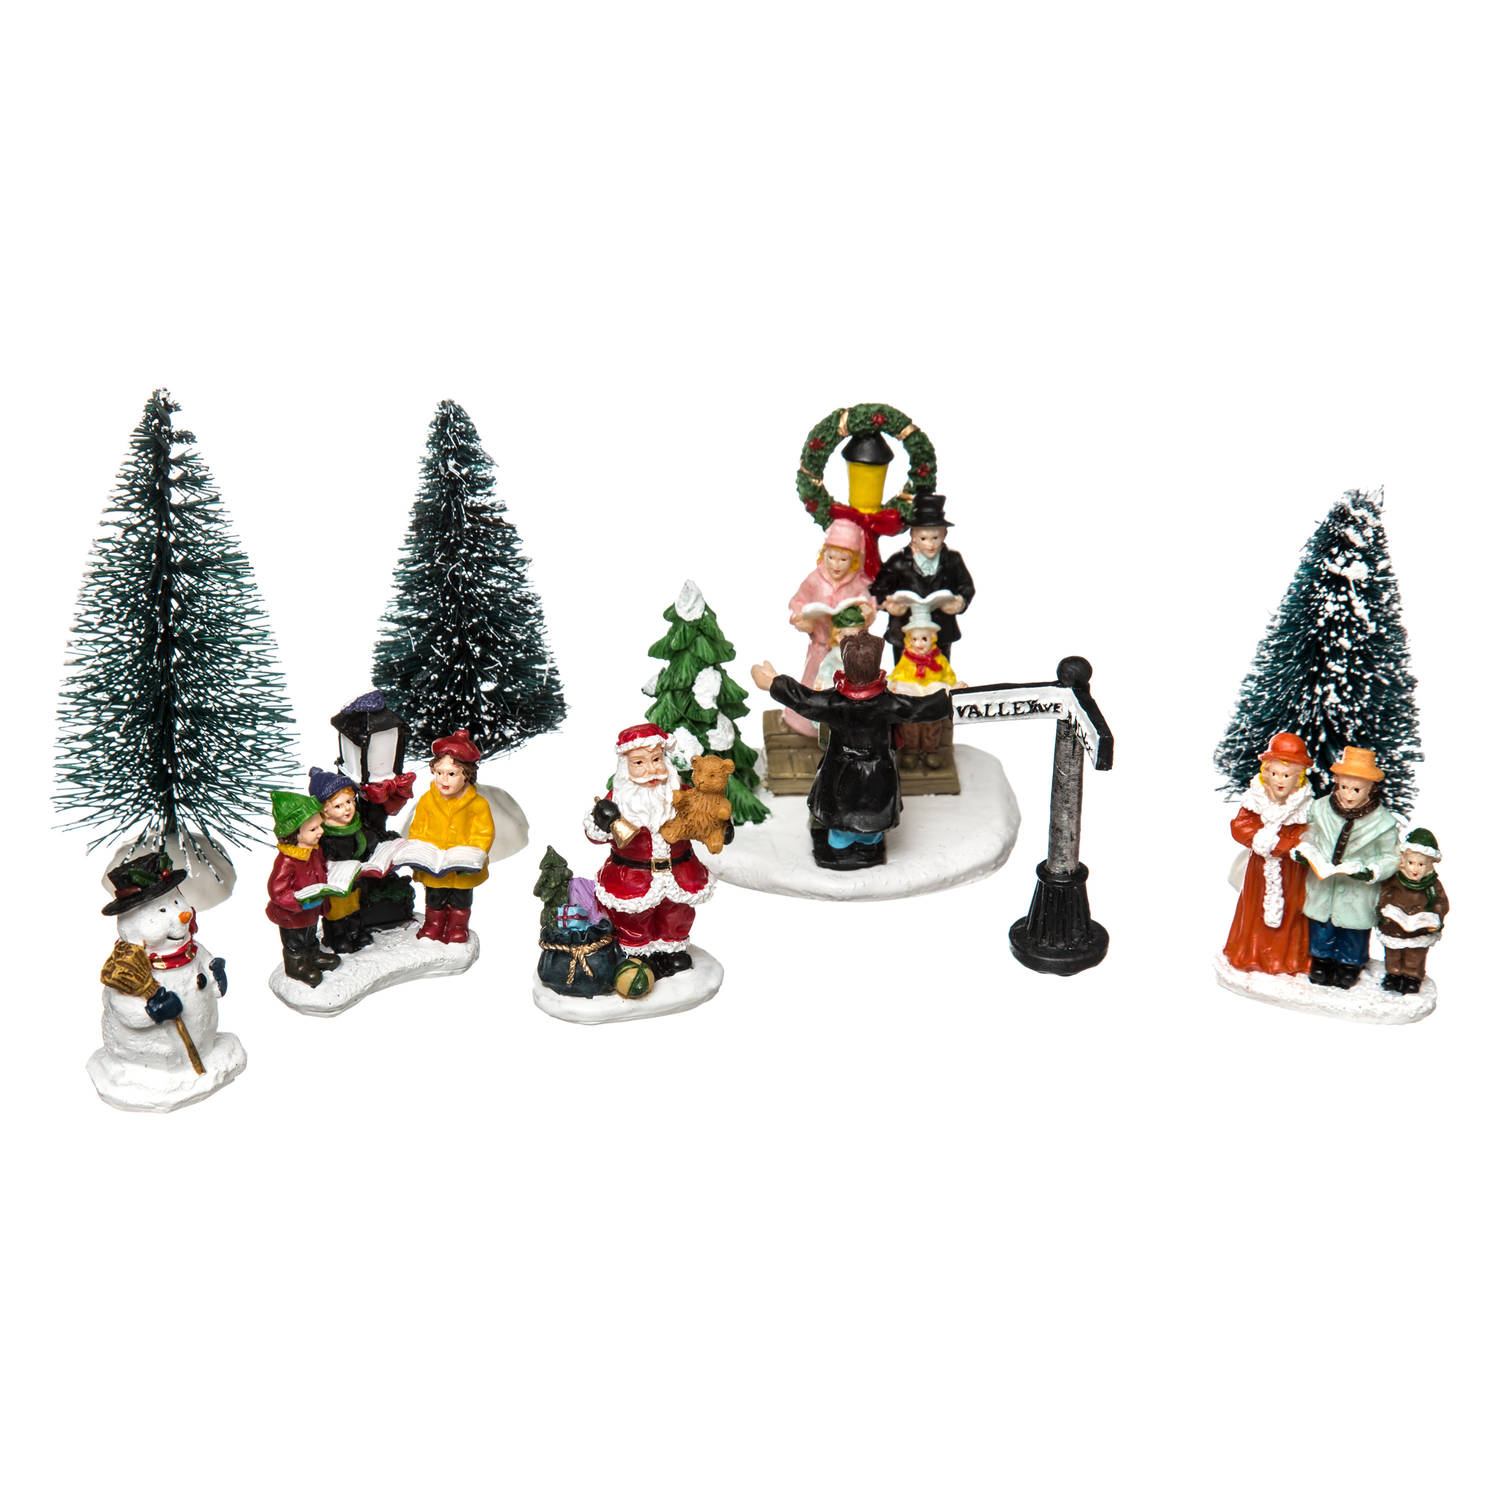 Feeric lights and christmas kerstdorp accessoires-miniatuur figuurtjes Kerstdorpen